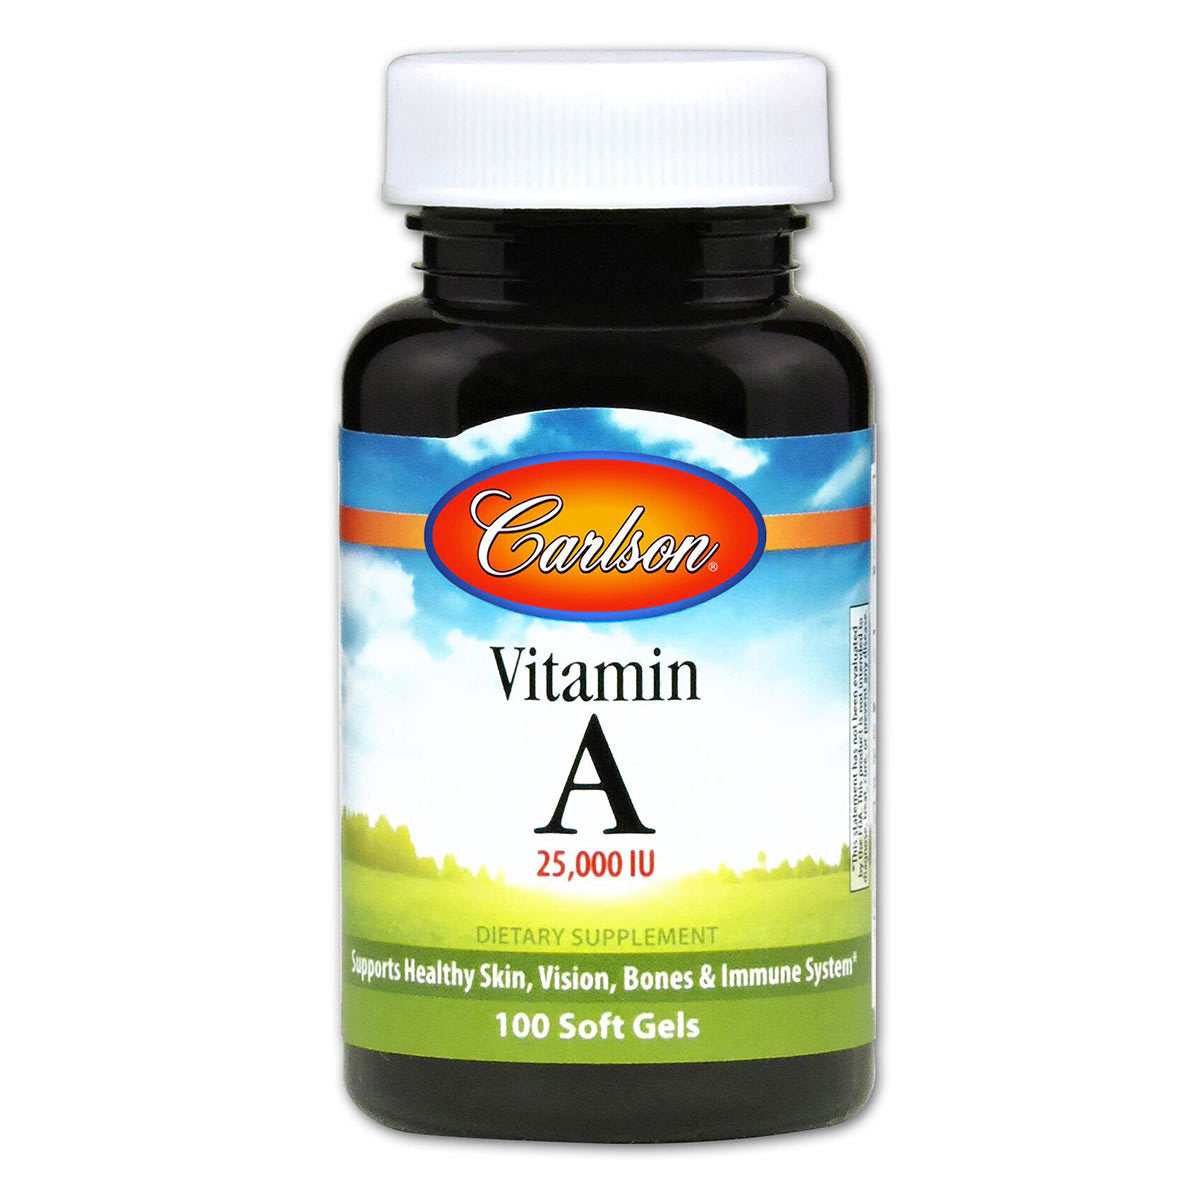 Primary image of Vitamin A 25,000IU